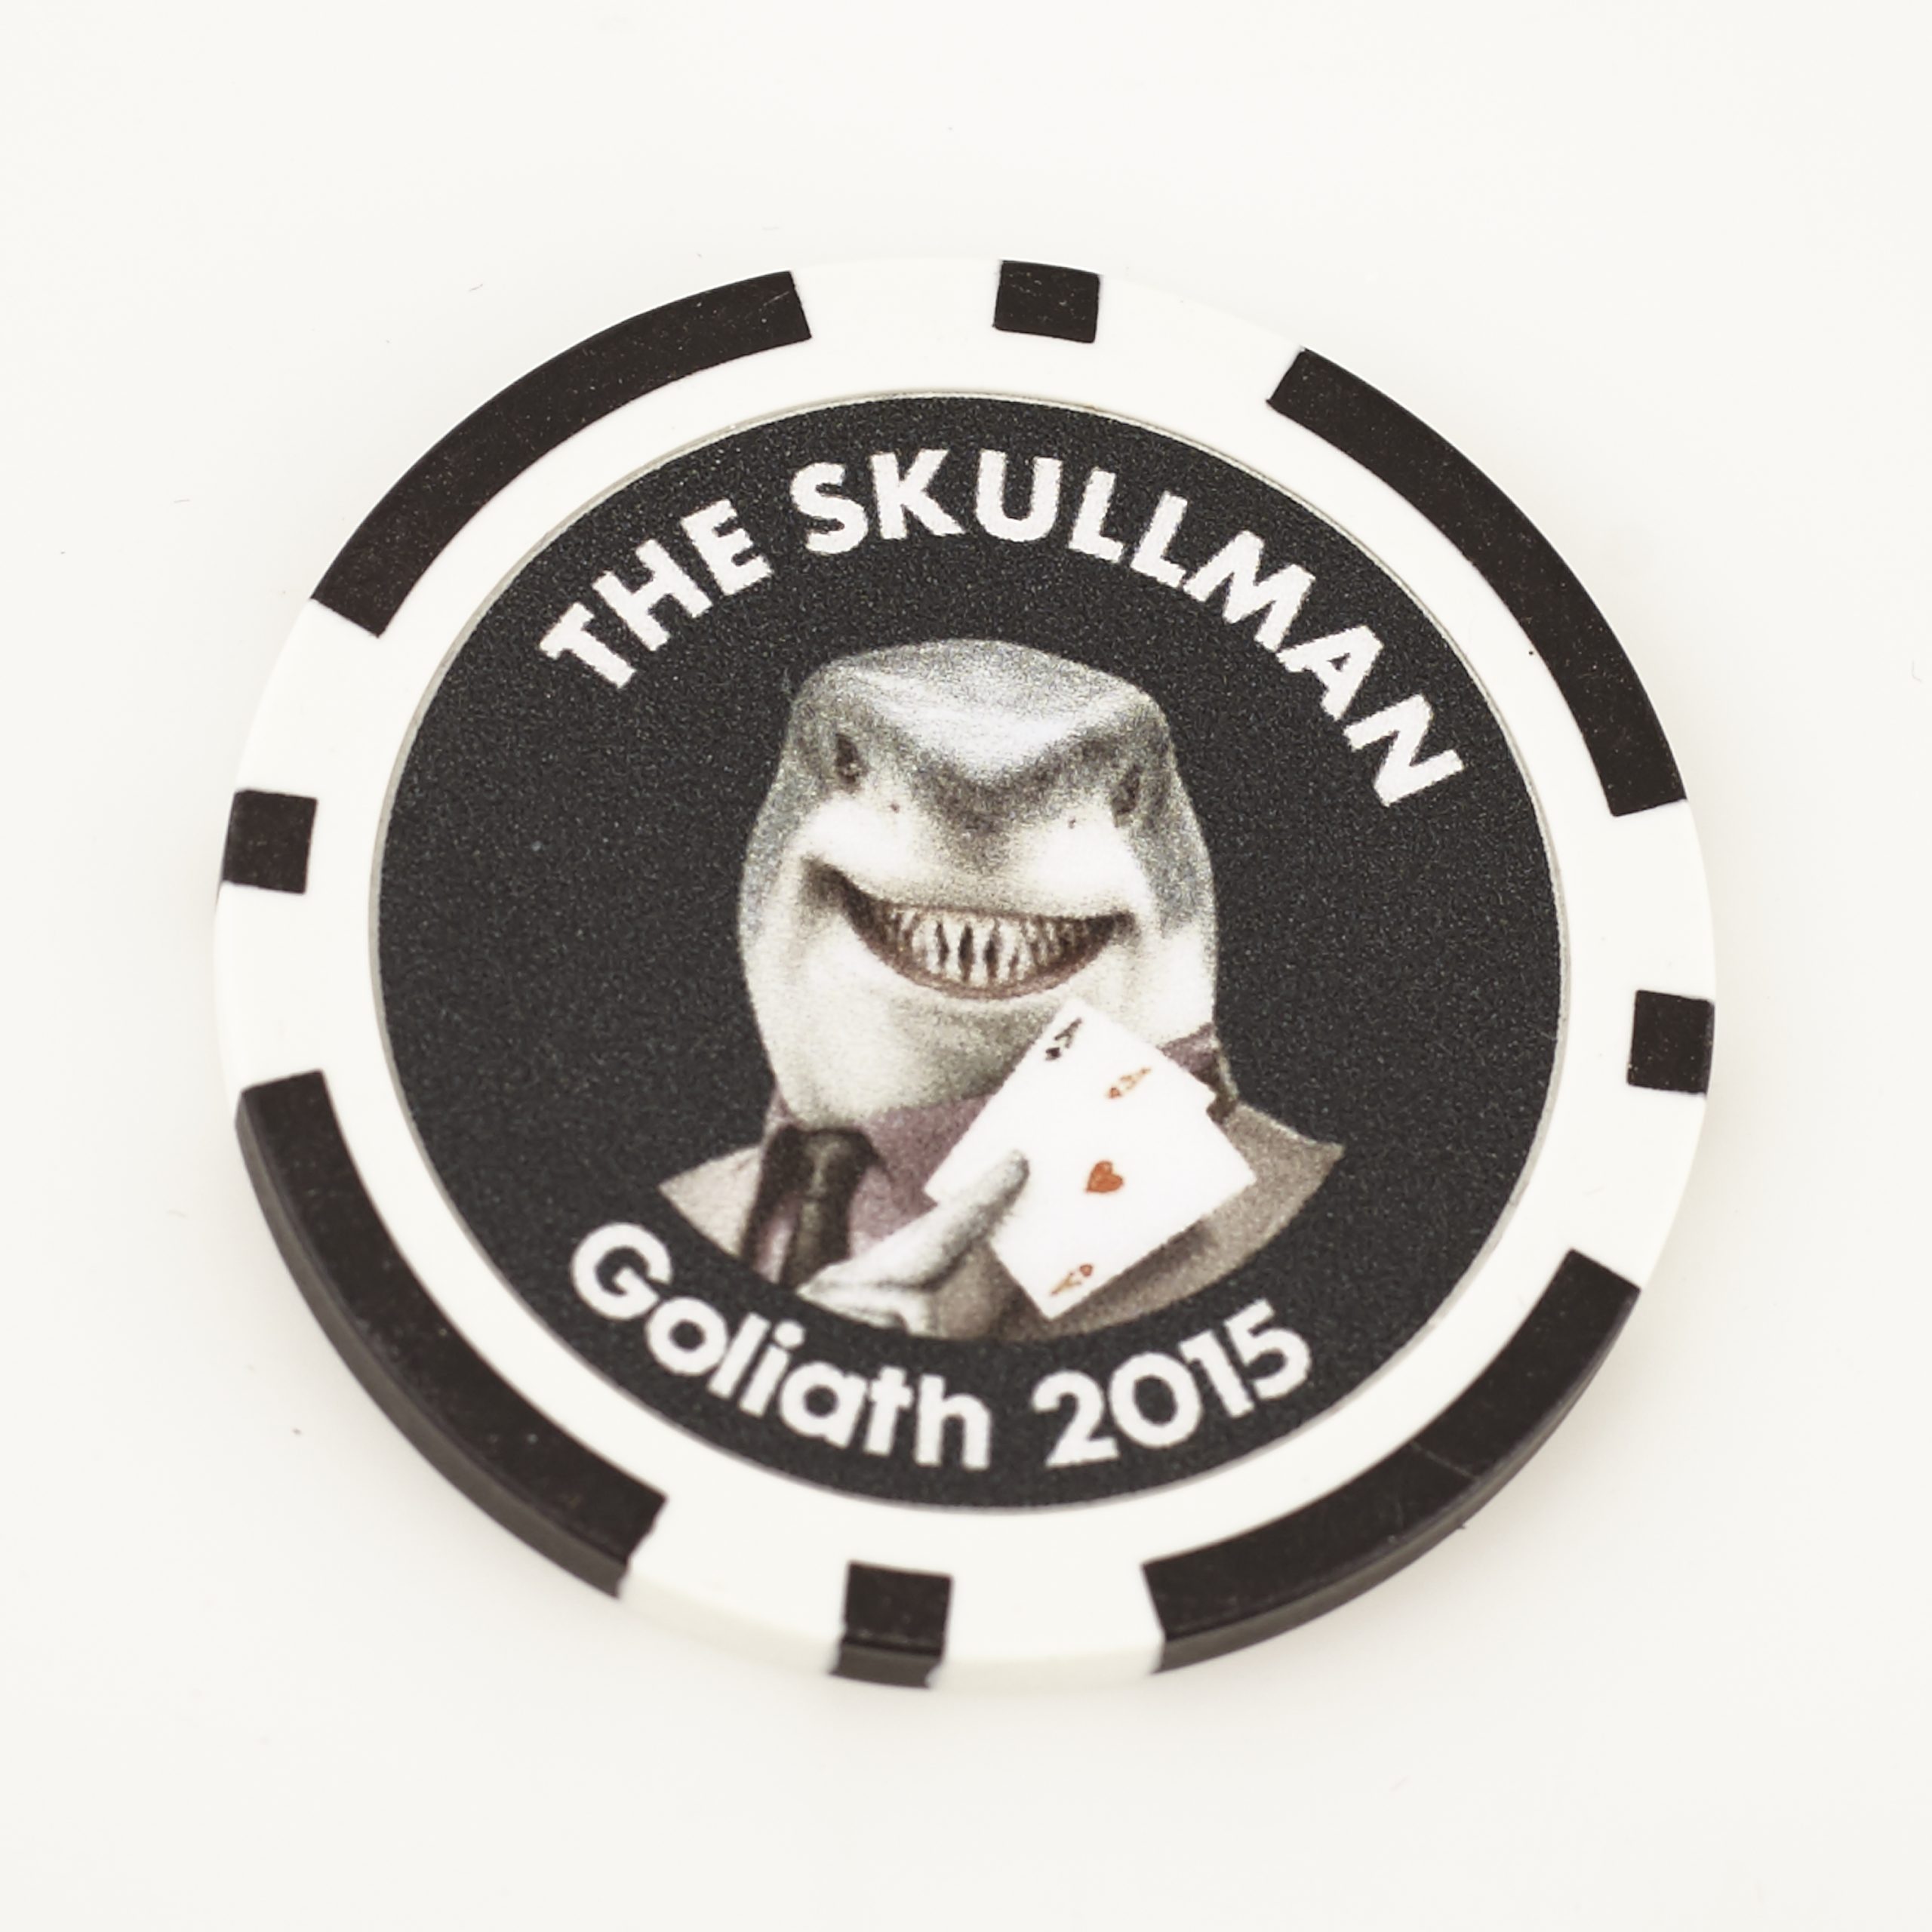 THE SKULLMAN, GOLIATH 2015, GROSVENOR CASINOS, (LARGE) Poker Card Guard Chip